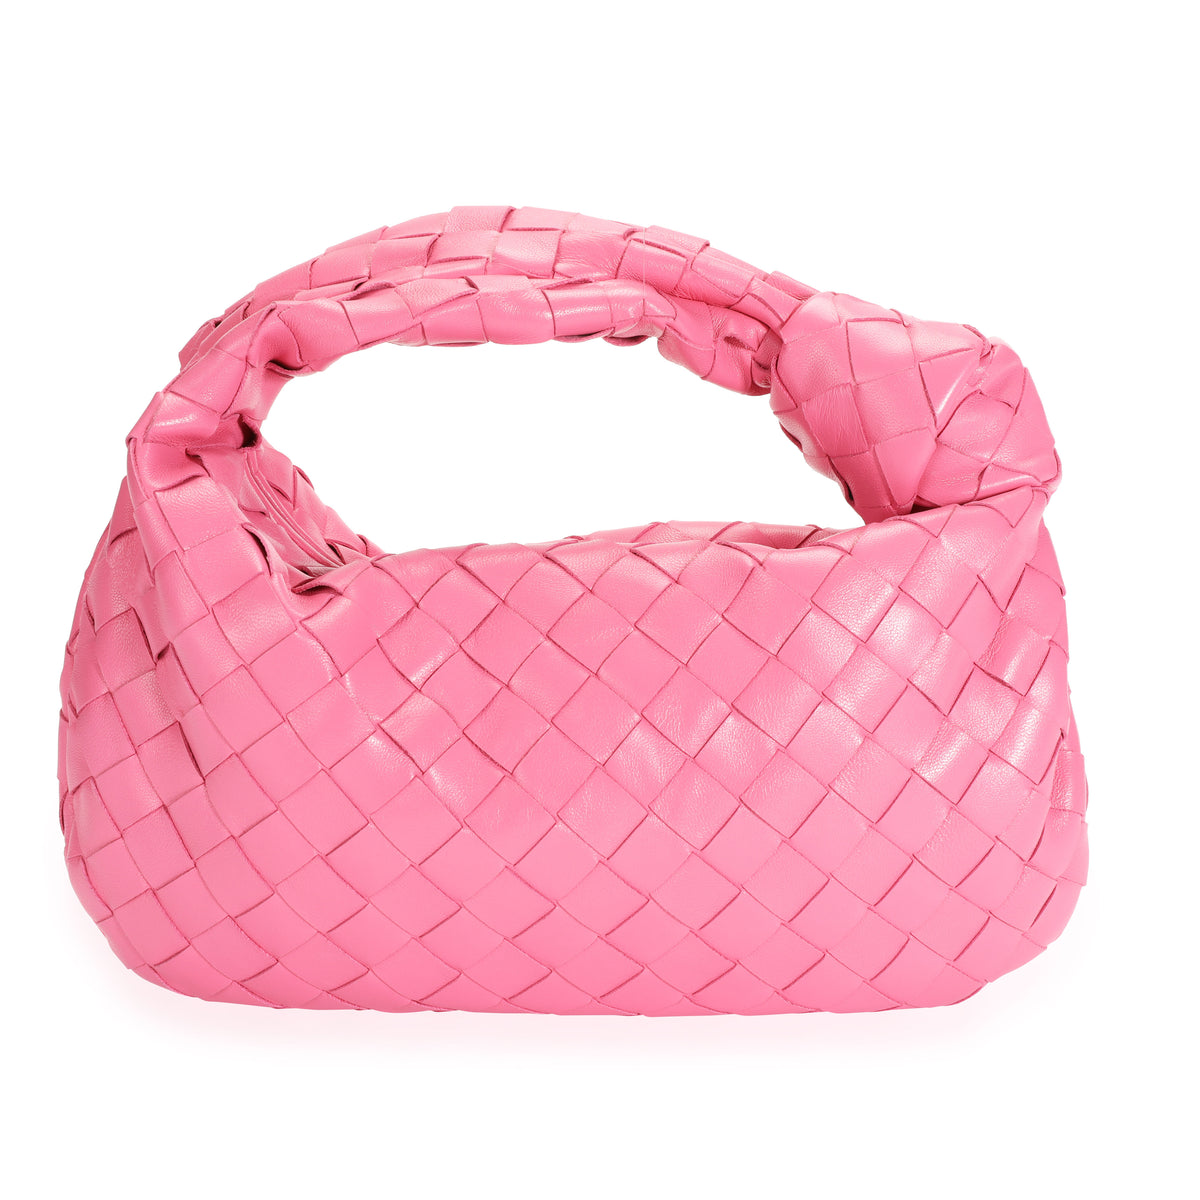 Bottega Veneta Point - Pre-owned Women's Leather Cross Body Bag - Pink - One Size